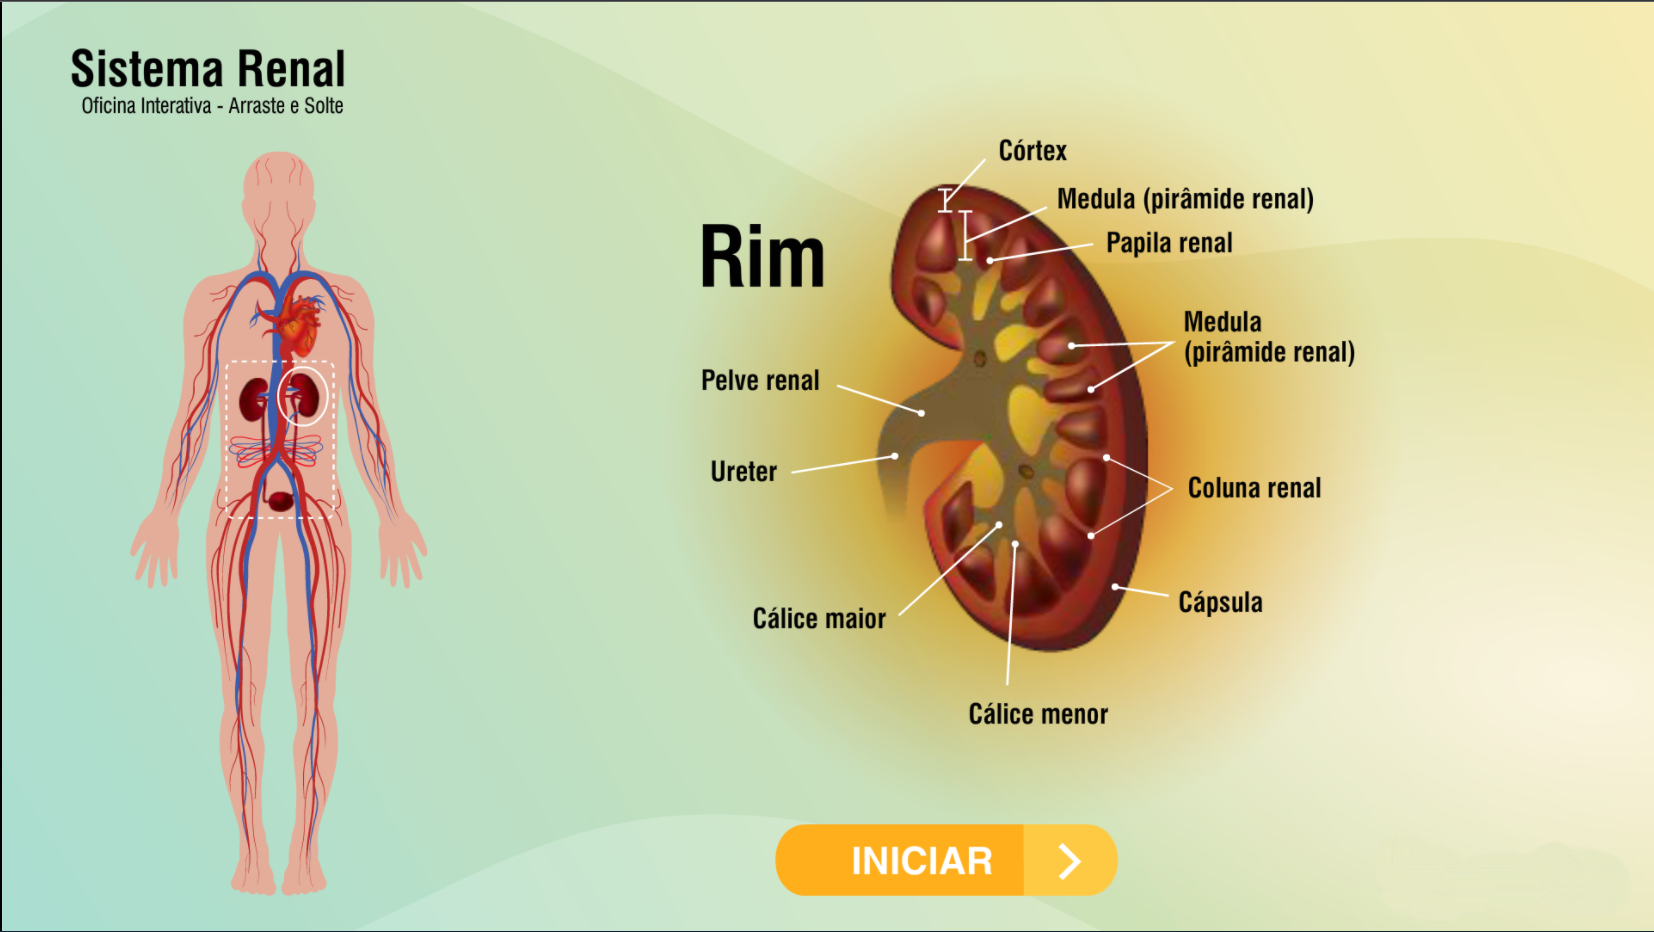 Sistema renal